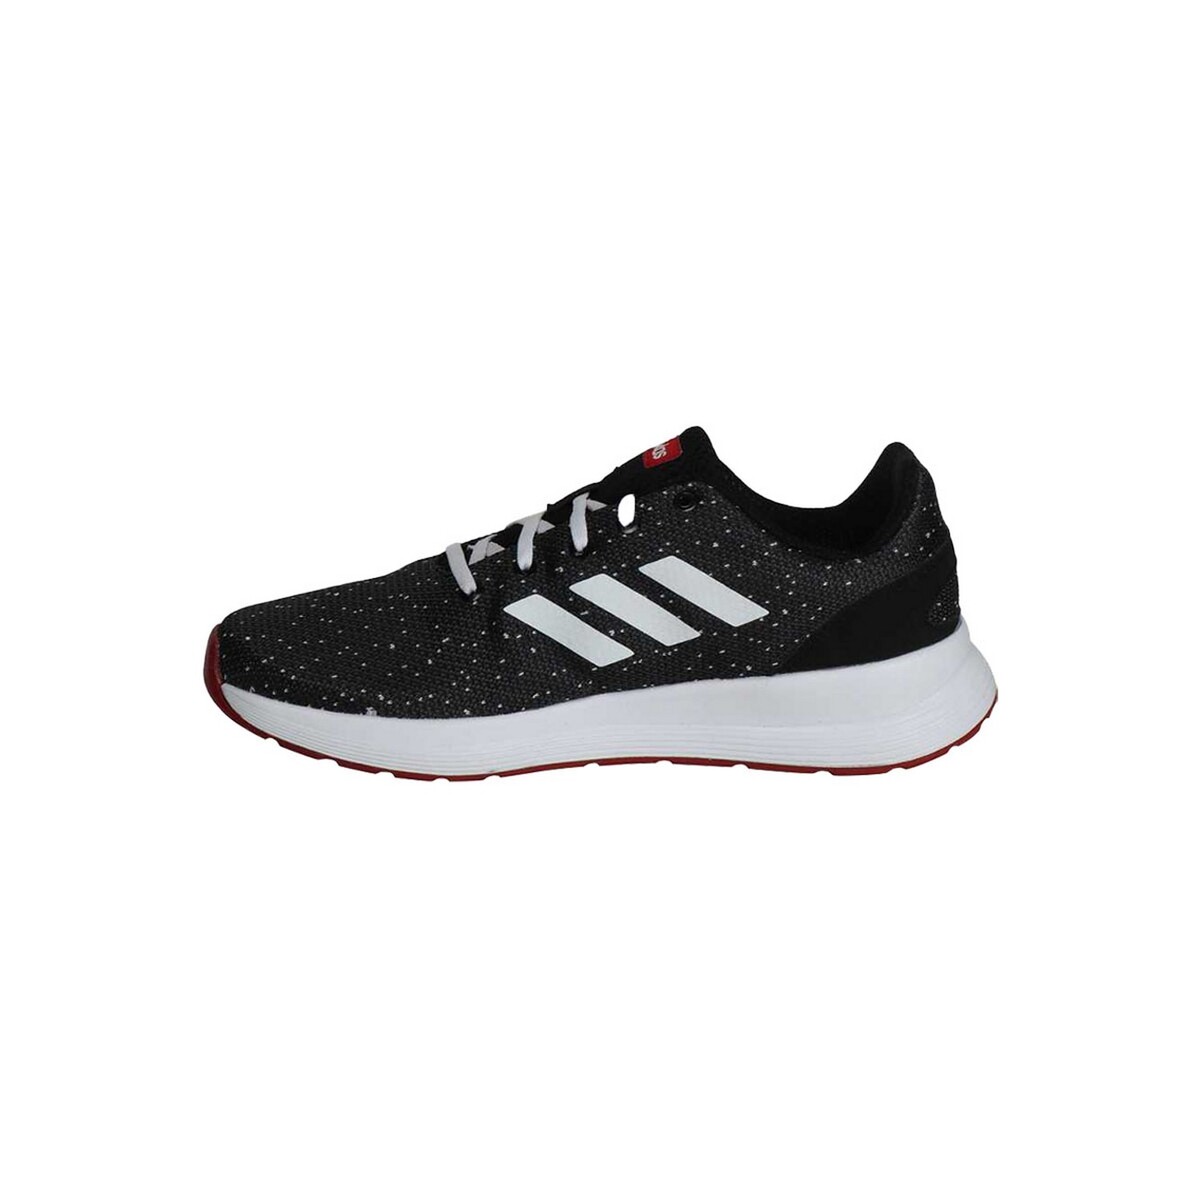 Adidas Mens Sports Shoes CM4921, 11